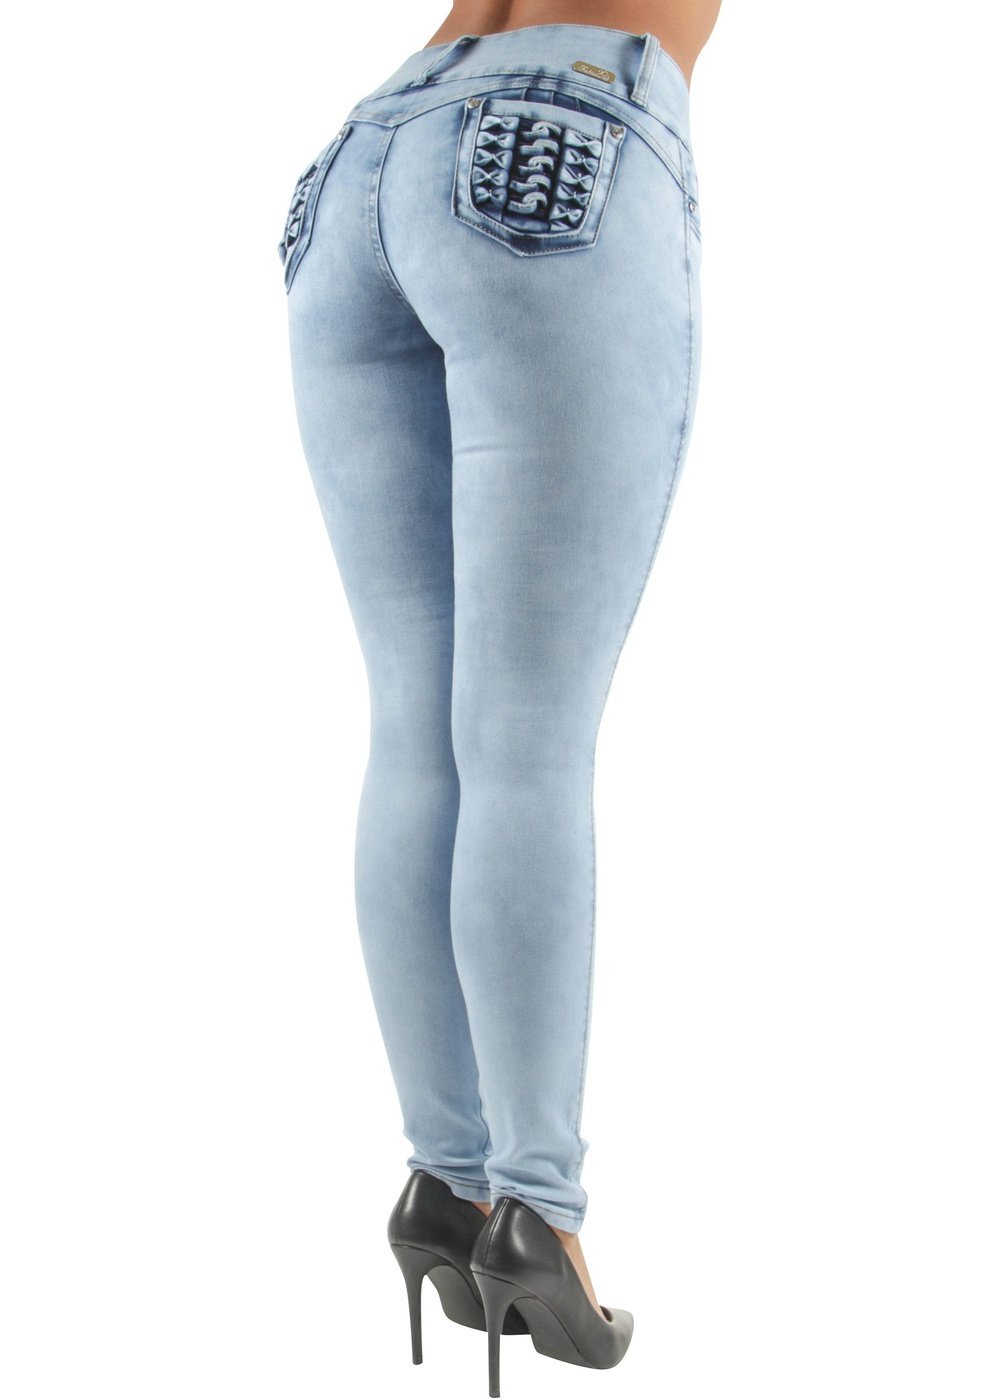 Fashion2Love FREE SHIPPING - Women s Juniors Butt Lift Push Up Super High  Waist Skinny Jeans